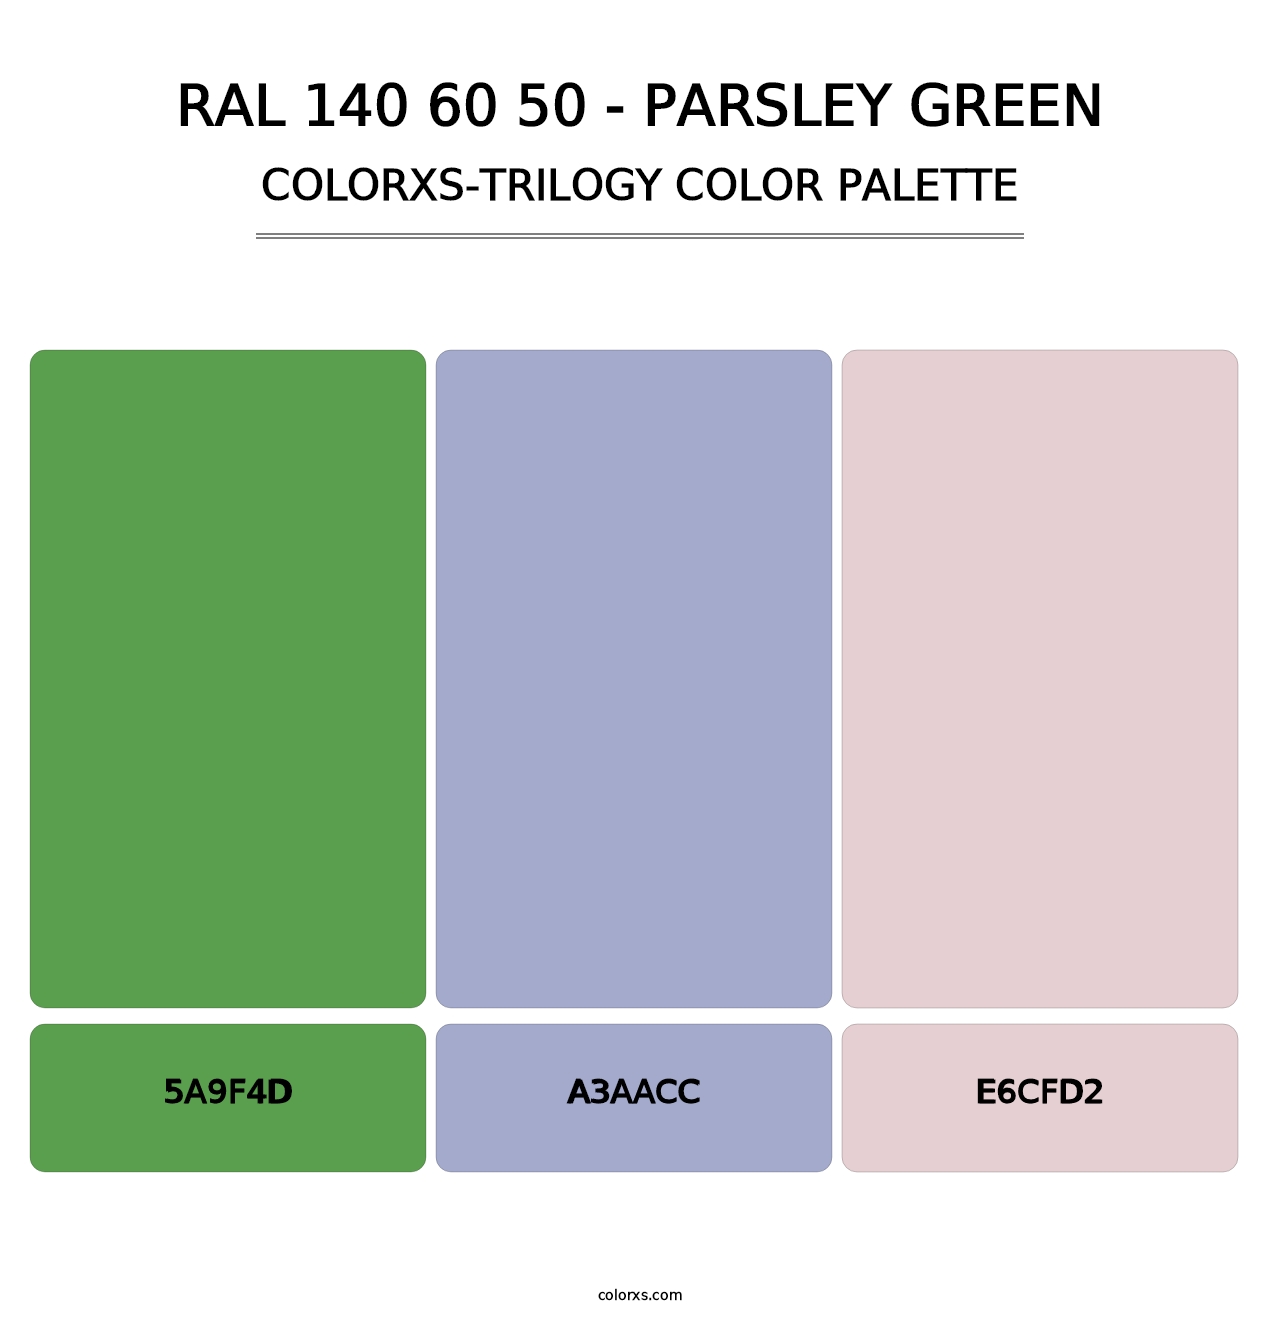 RAL 140 60 50 - Parsley Green - Colorxs Trilogy Palette